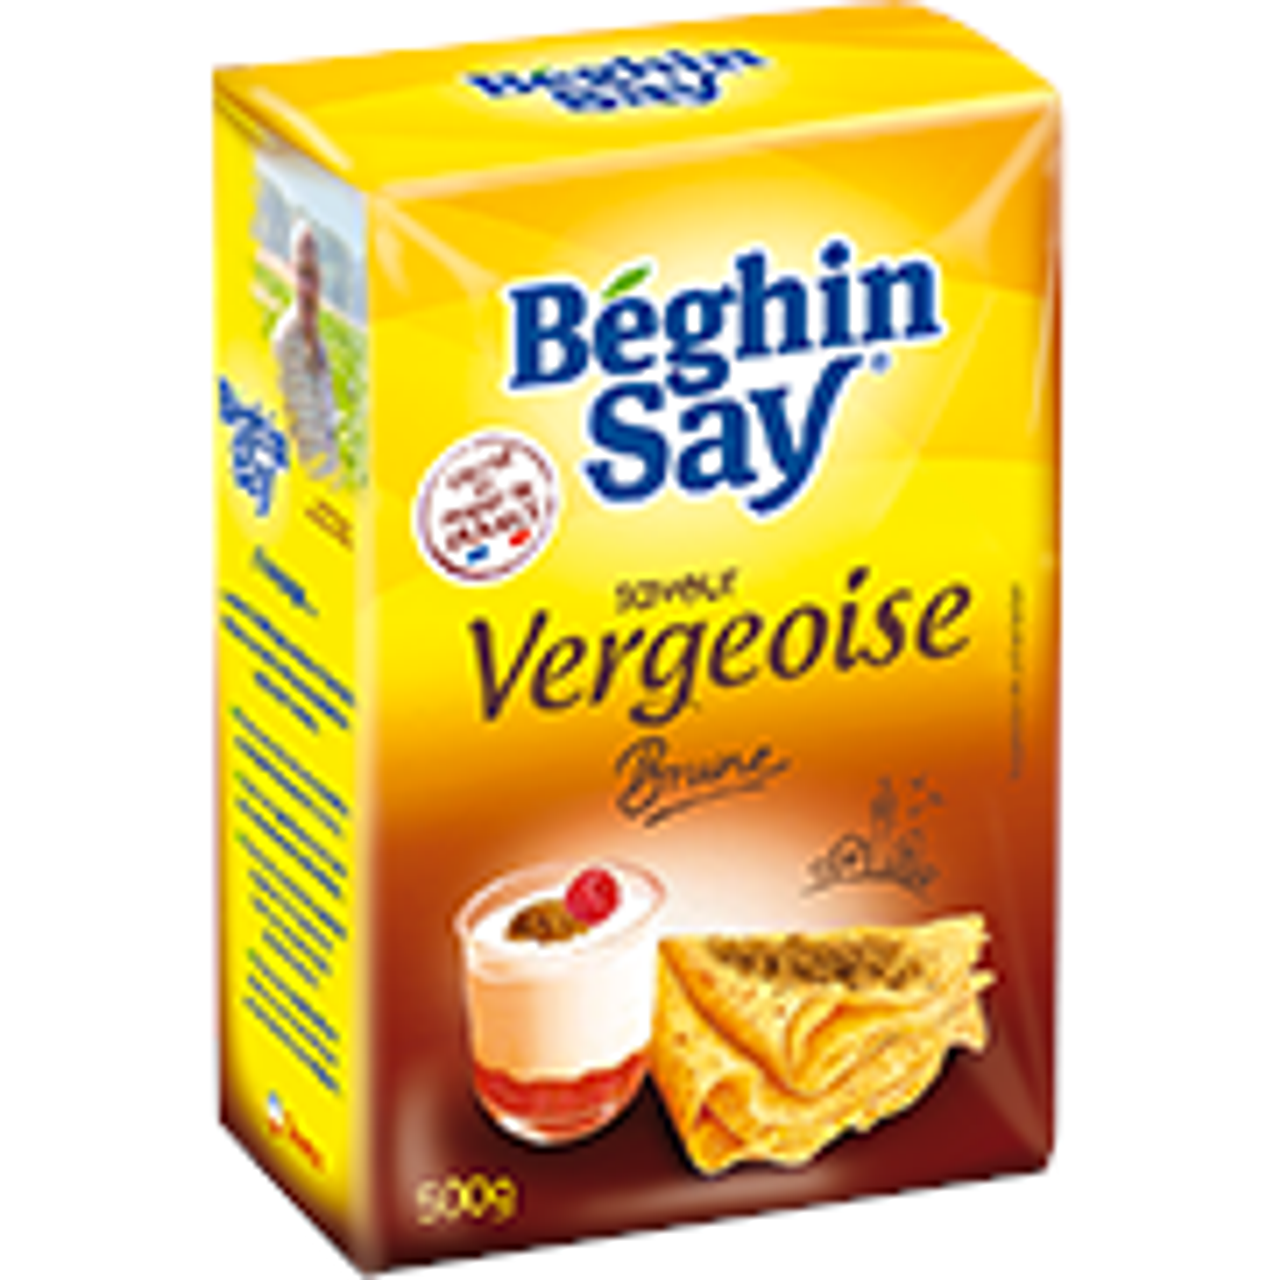 Saveur Vergeoise Brune - Beghin Say - 500 g